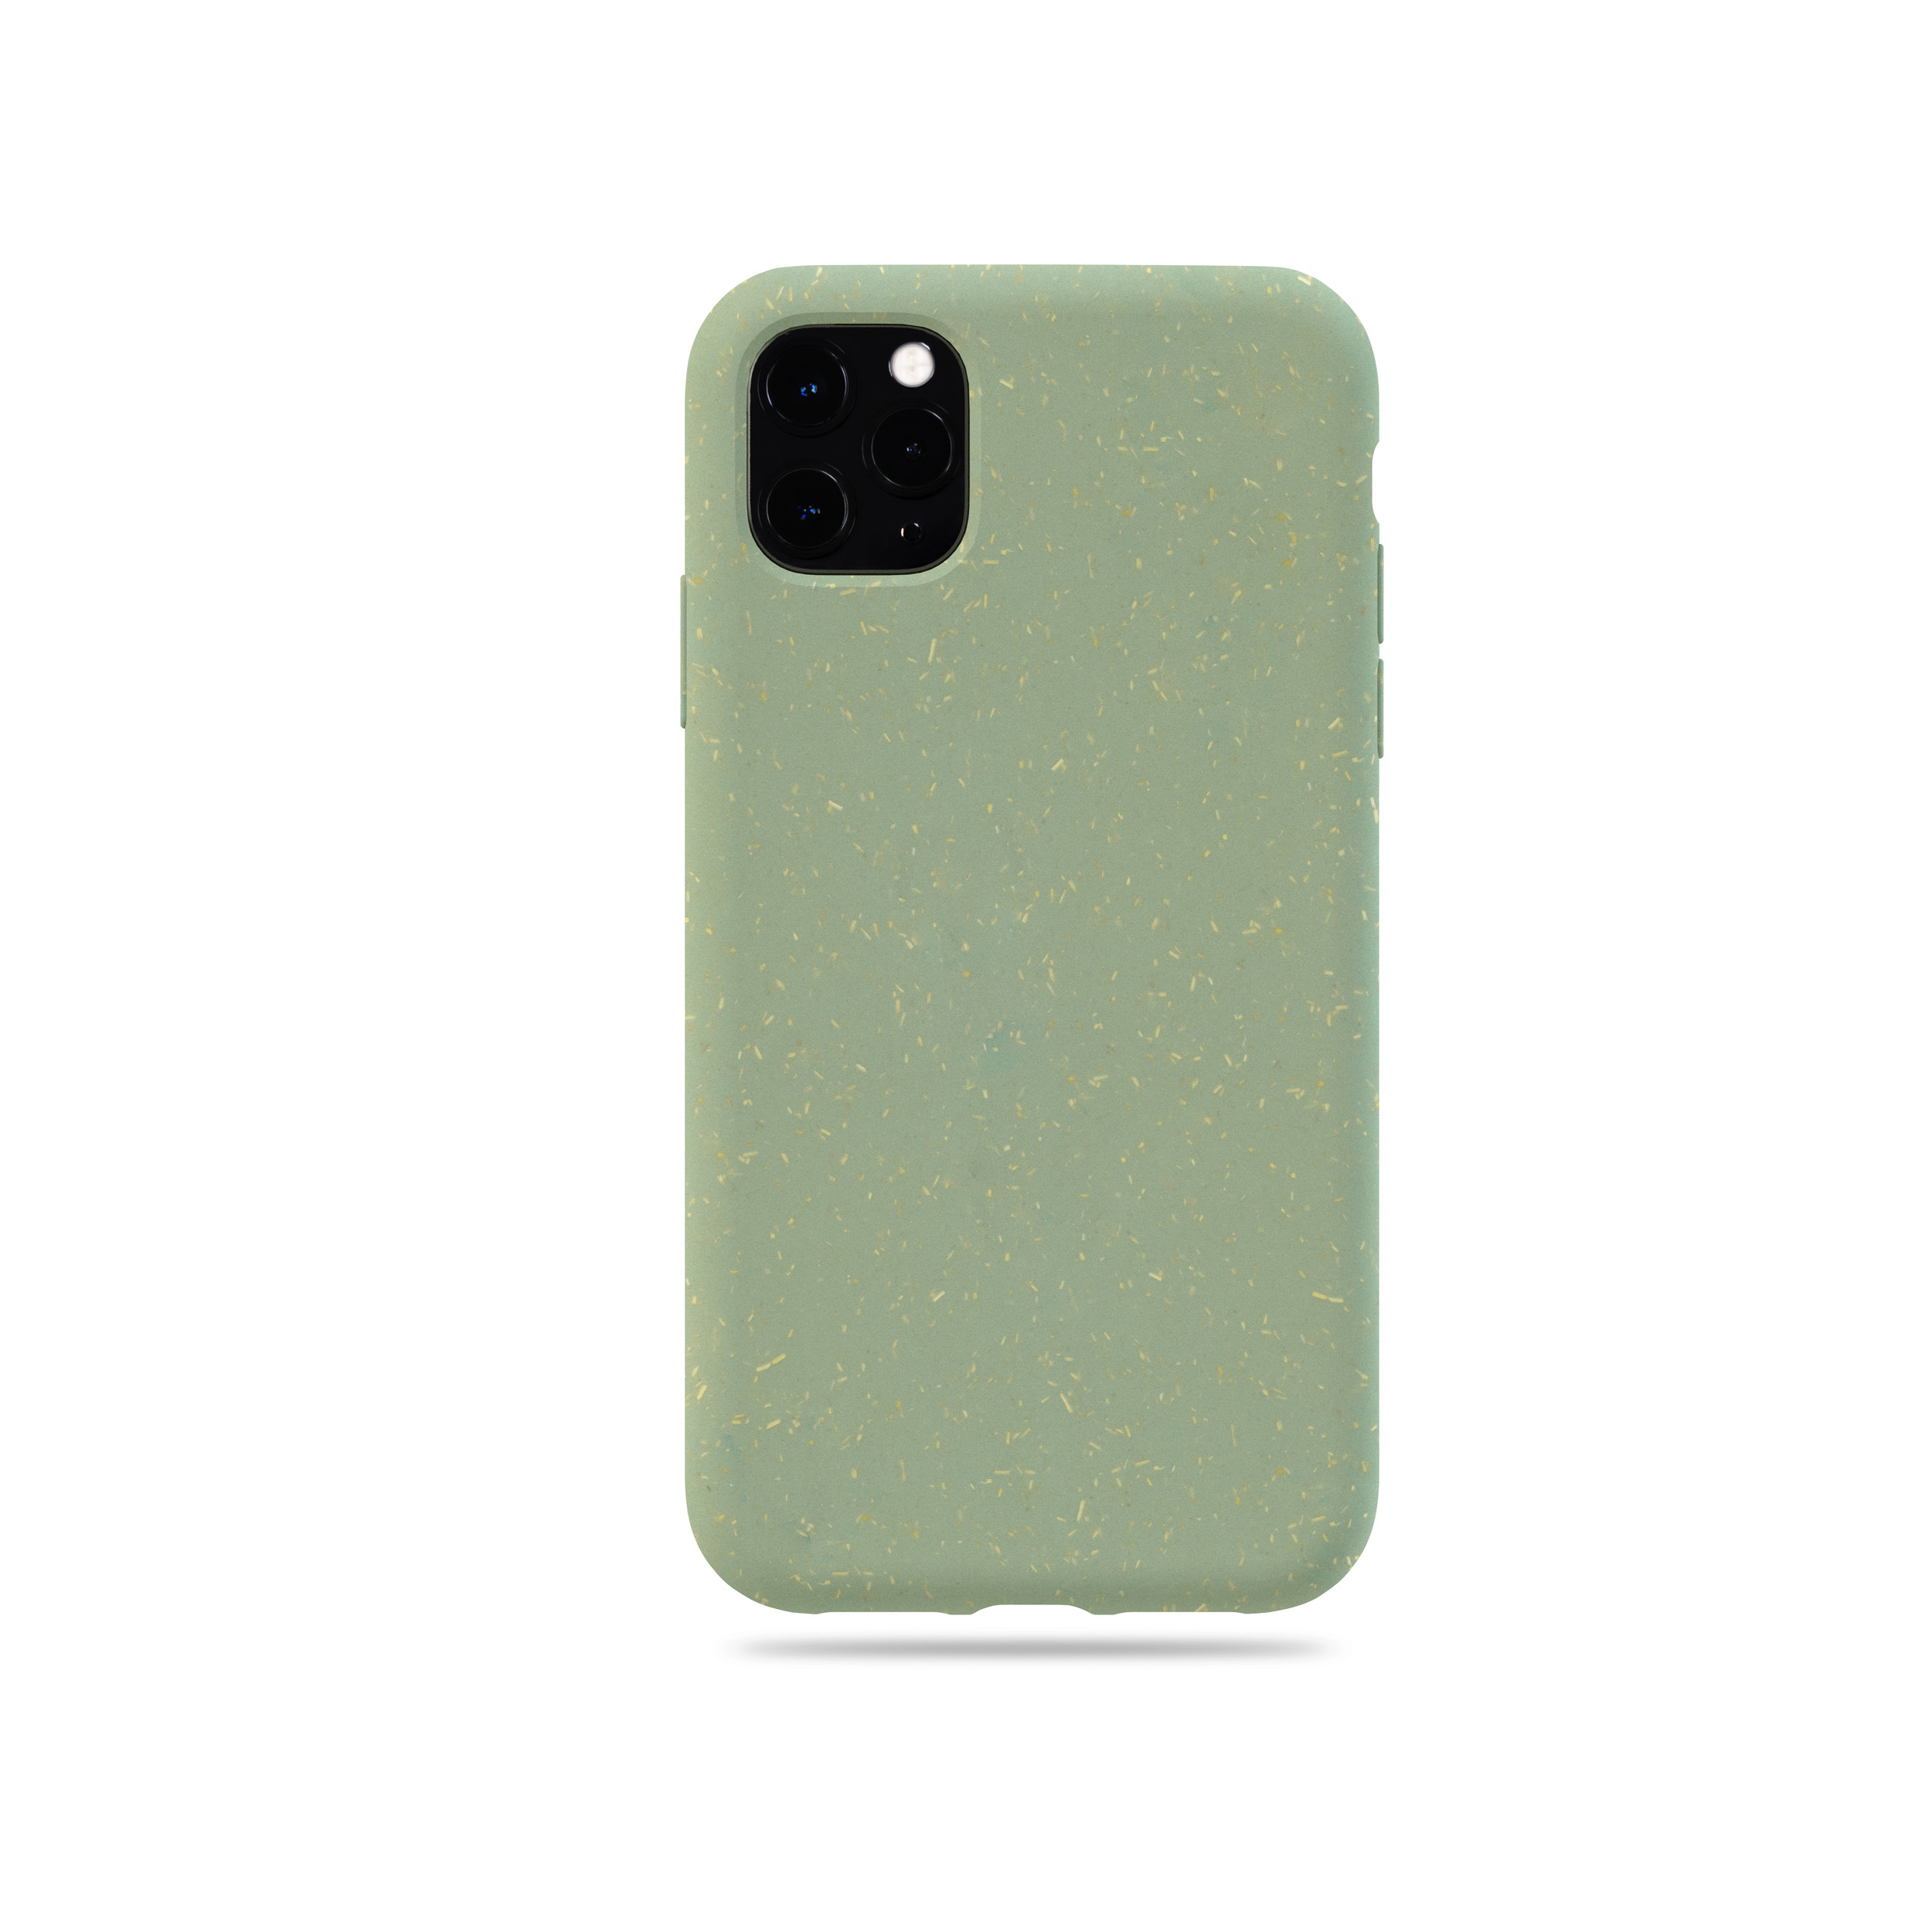 Apple, Biologisch-abbaubare Max, KMP iPhone Schutzhülle iPhone mint-green Rucksack, 11 Pro Pro für Max Mint-Green, 11